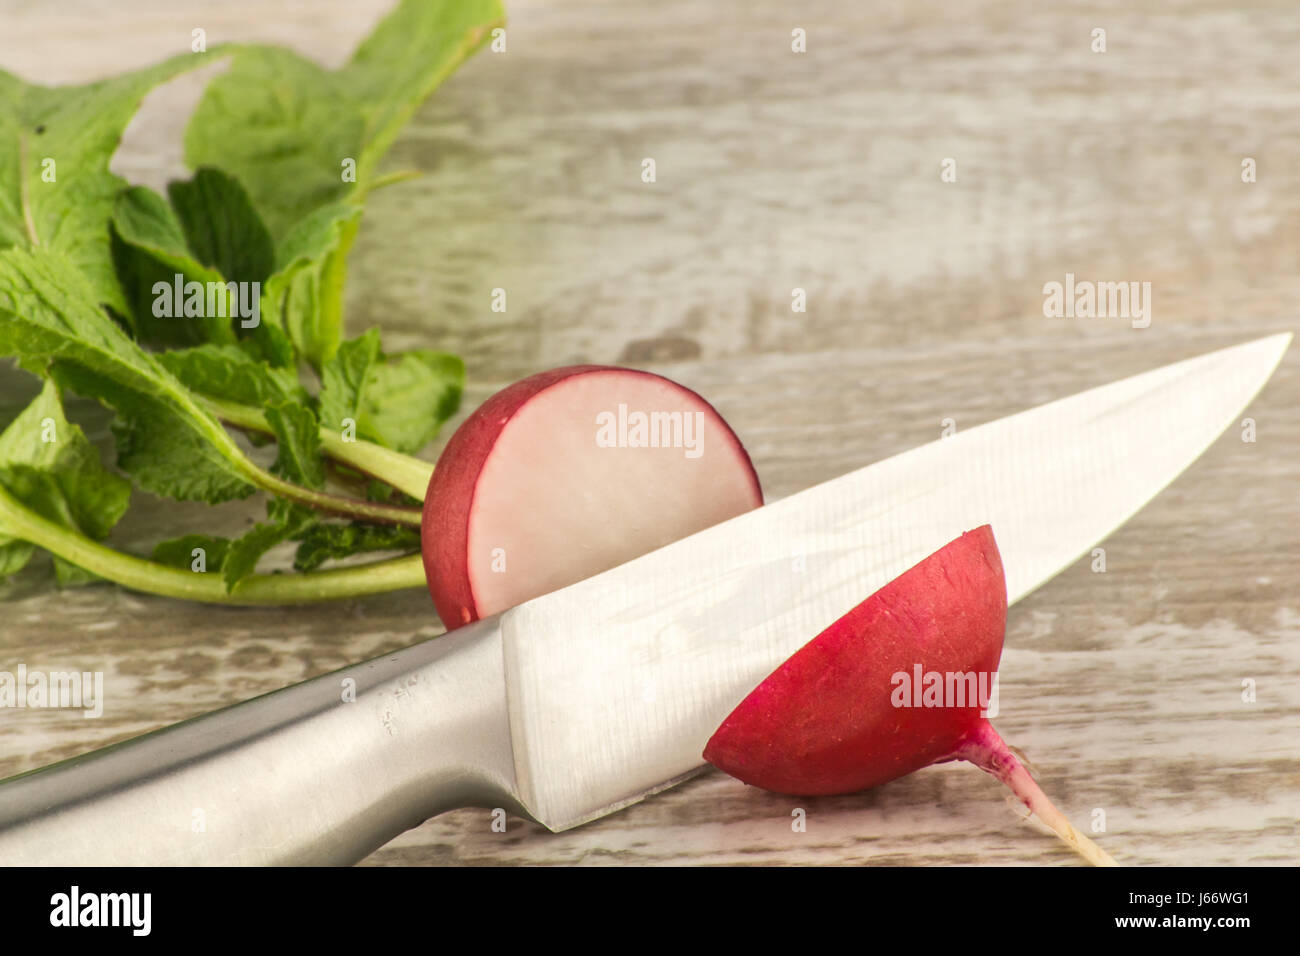 Premium Photo  Watercress salad radish knife on wooden board